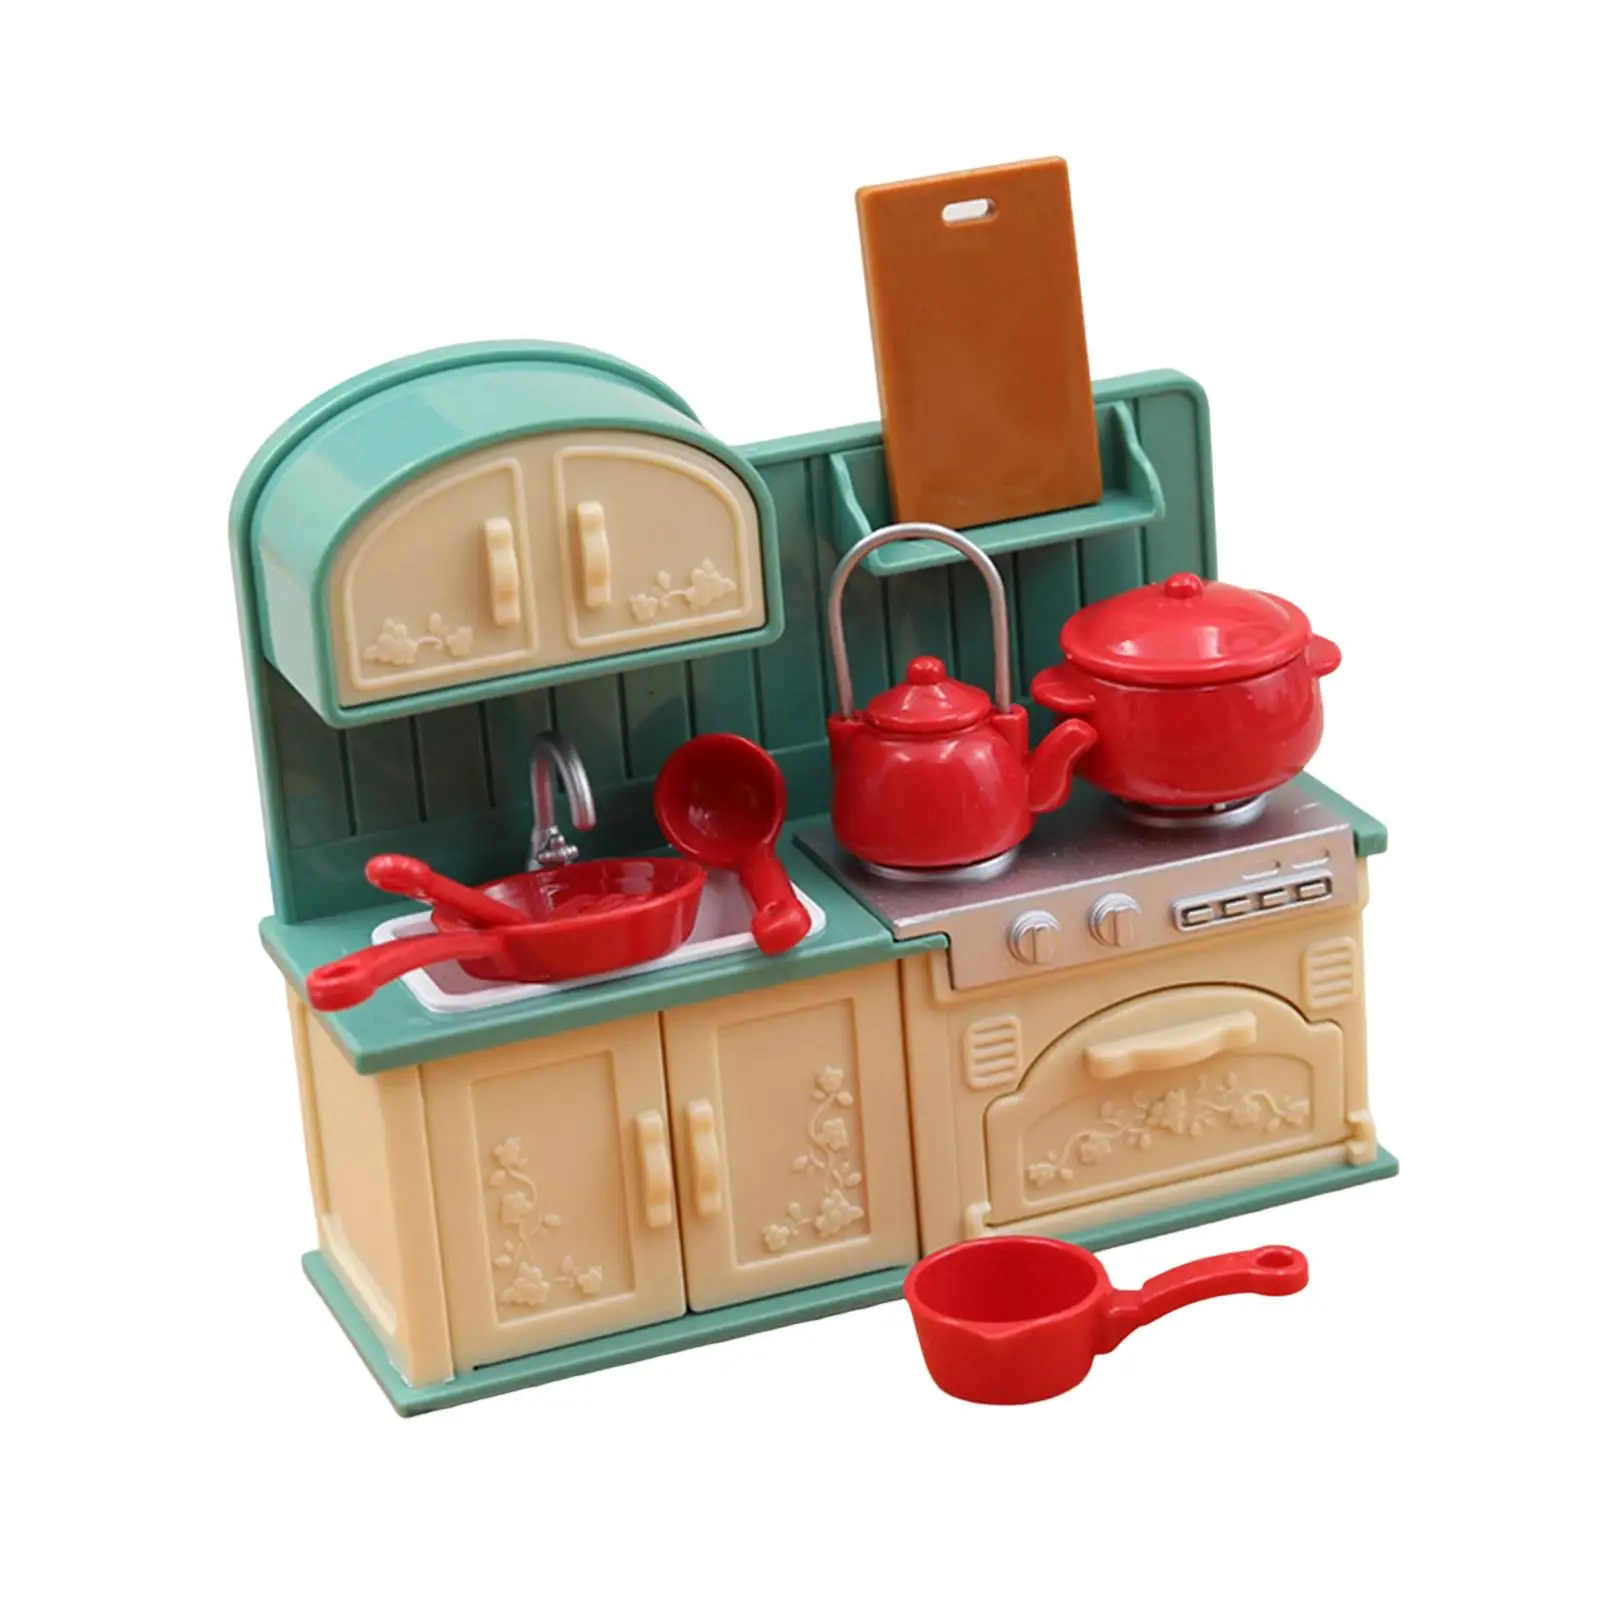 1/18 Scale Dollhouse Play Set Miniature Kitchen Toys Doll House Furniture Toys Dollhouse Furniture for Boys Presents